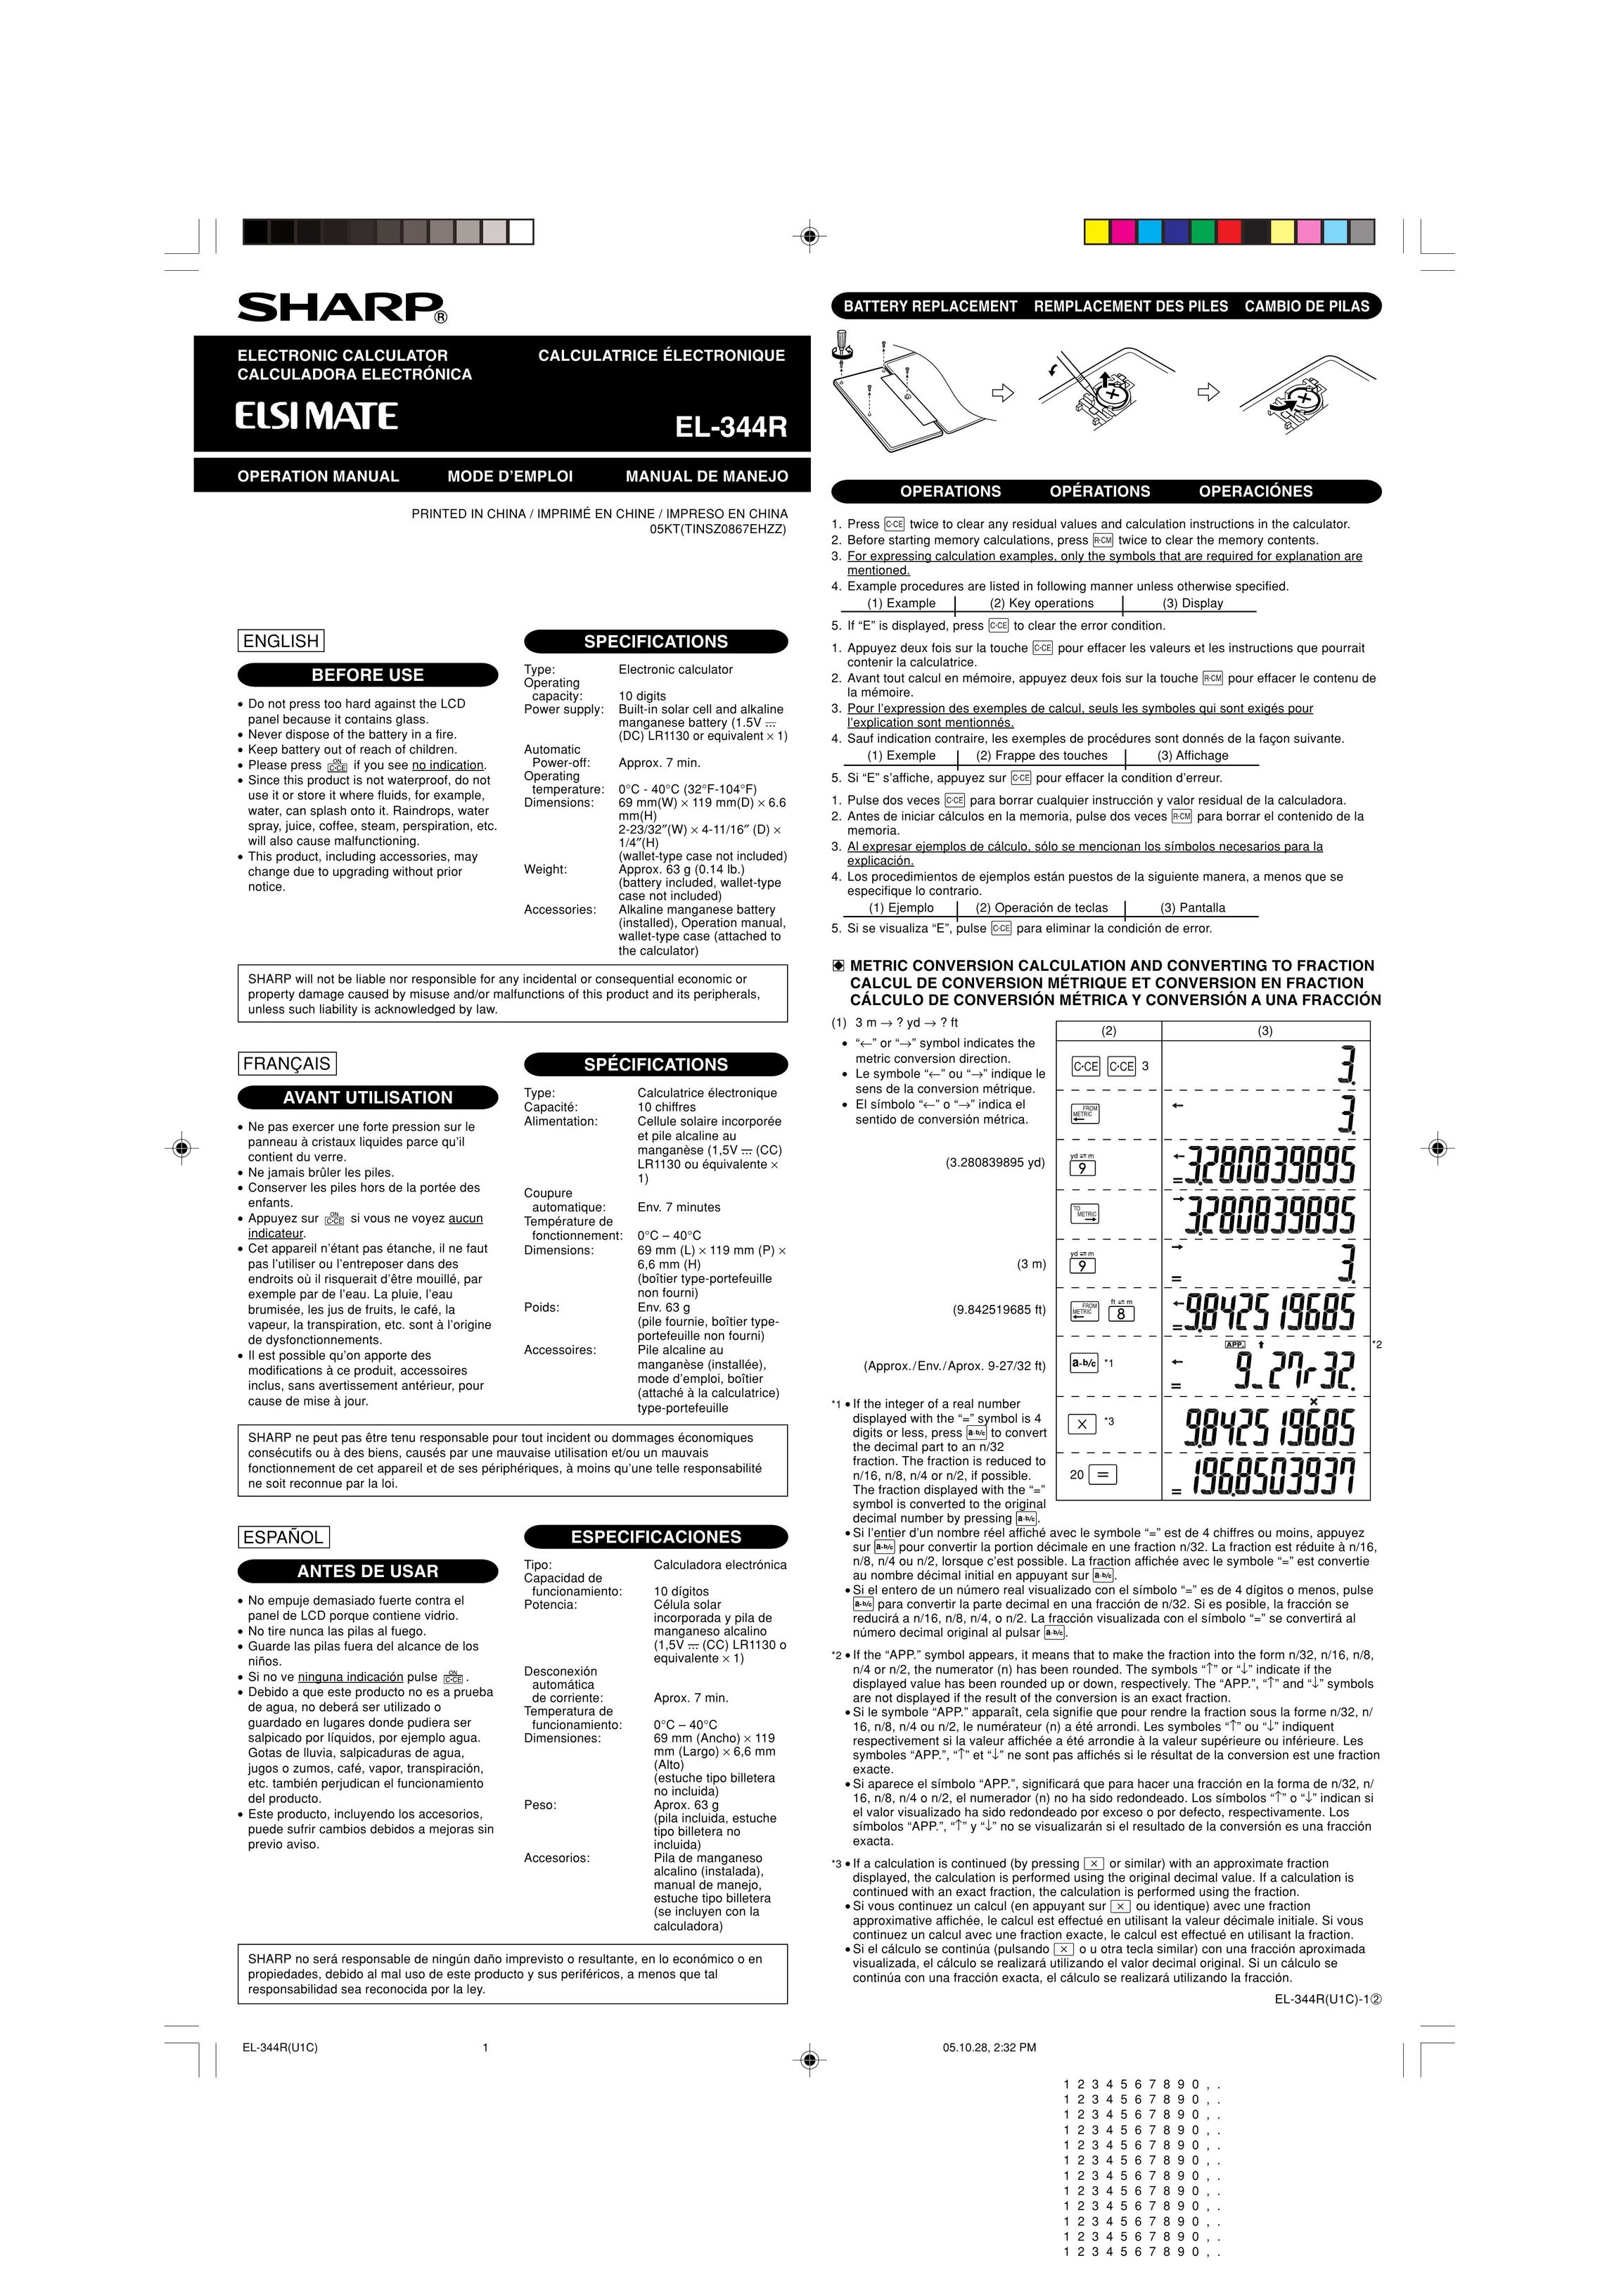 Sharp EL-344R Calculator User Manual